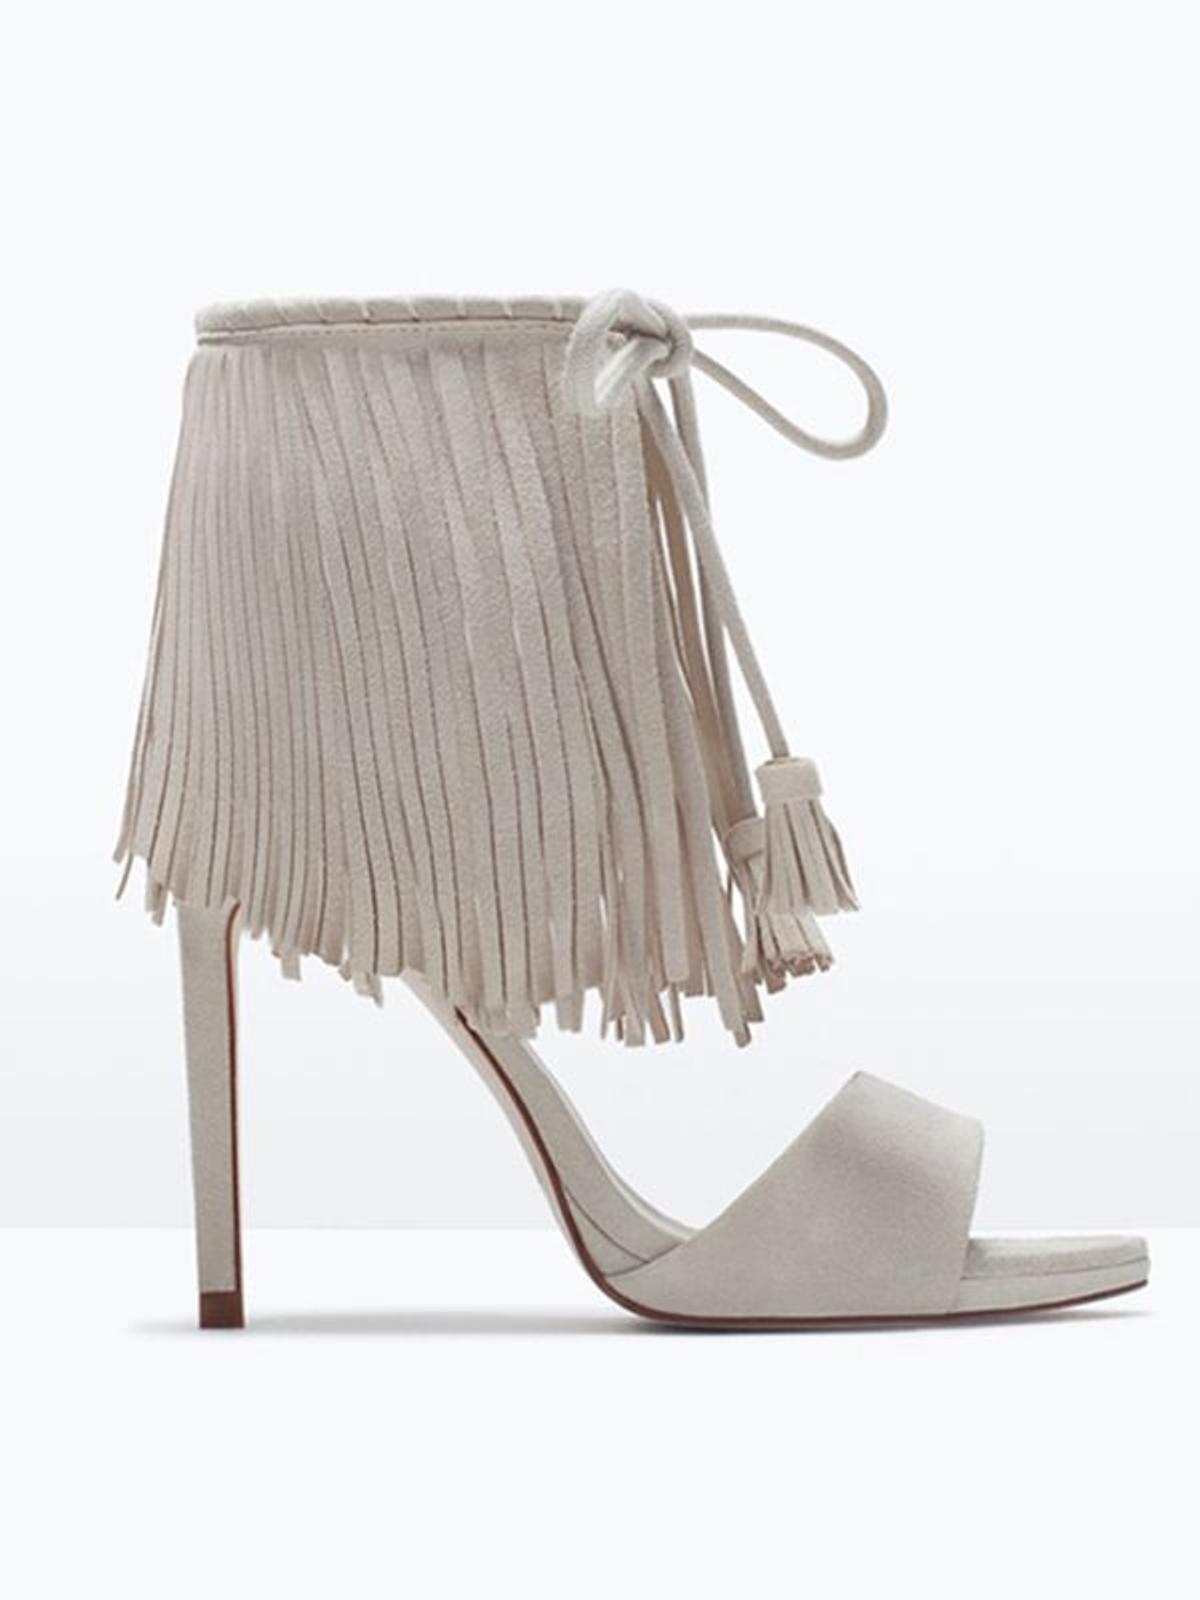 Tendencia sandalias atadas, Zara (49,95€)